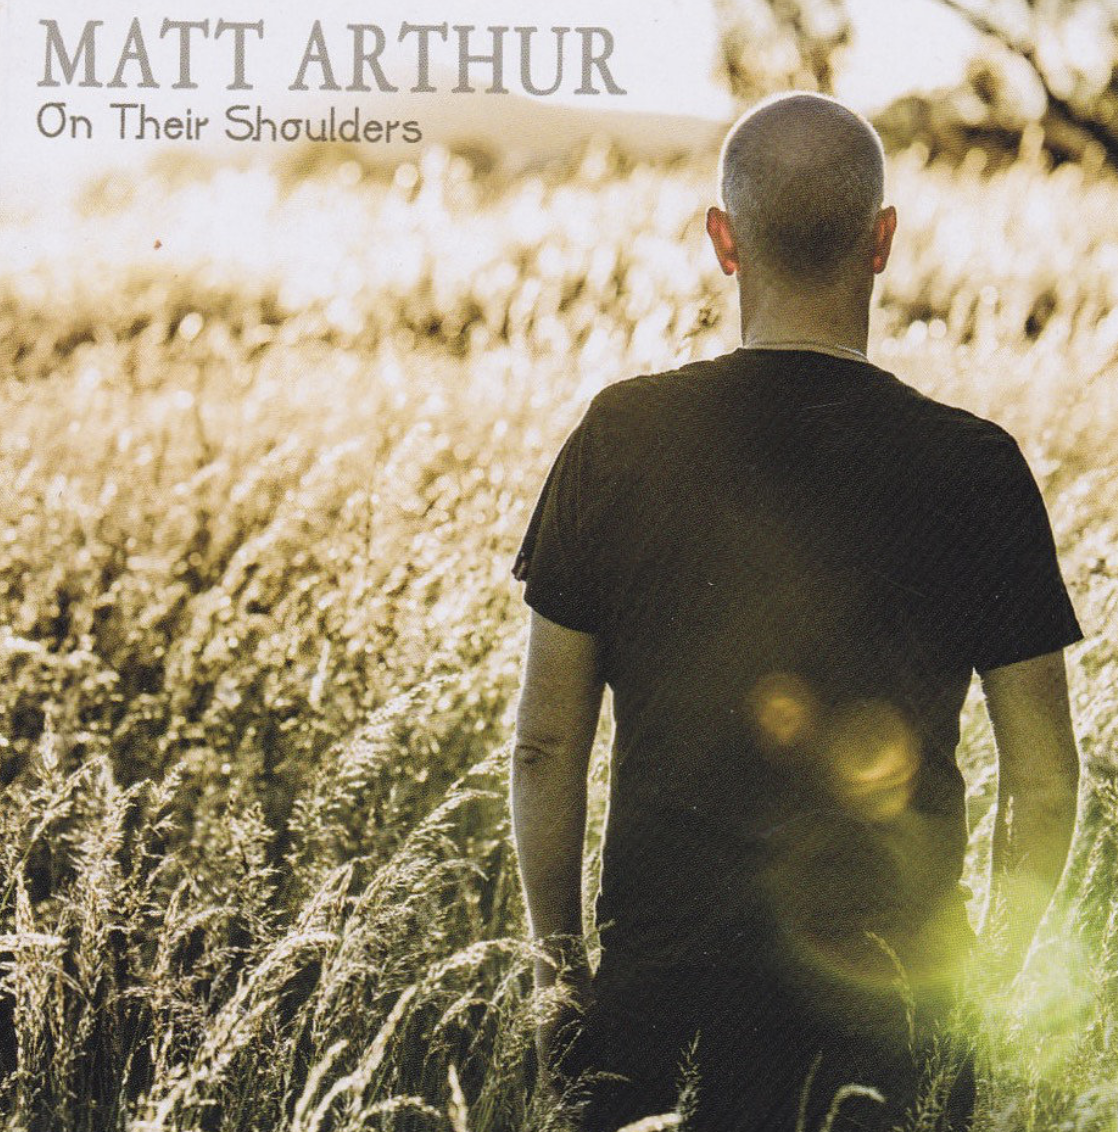 Matt Arthur - On Their Shoulders - blog post image 